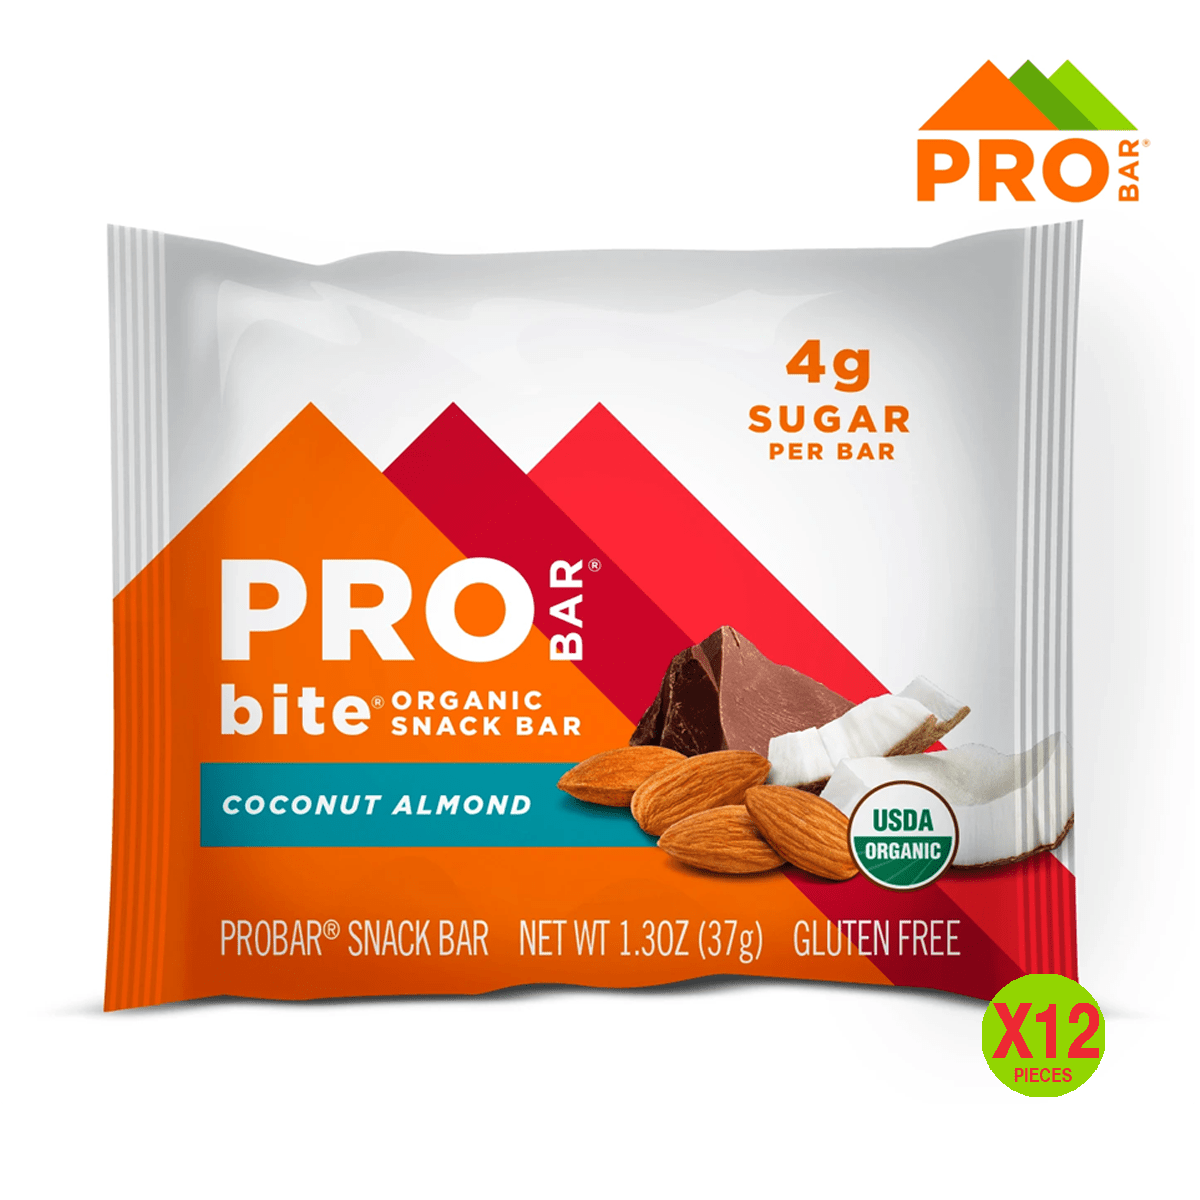 ProBar Bite Coconut Almond (12x37g)